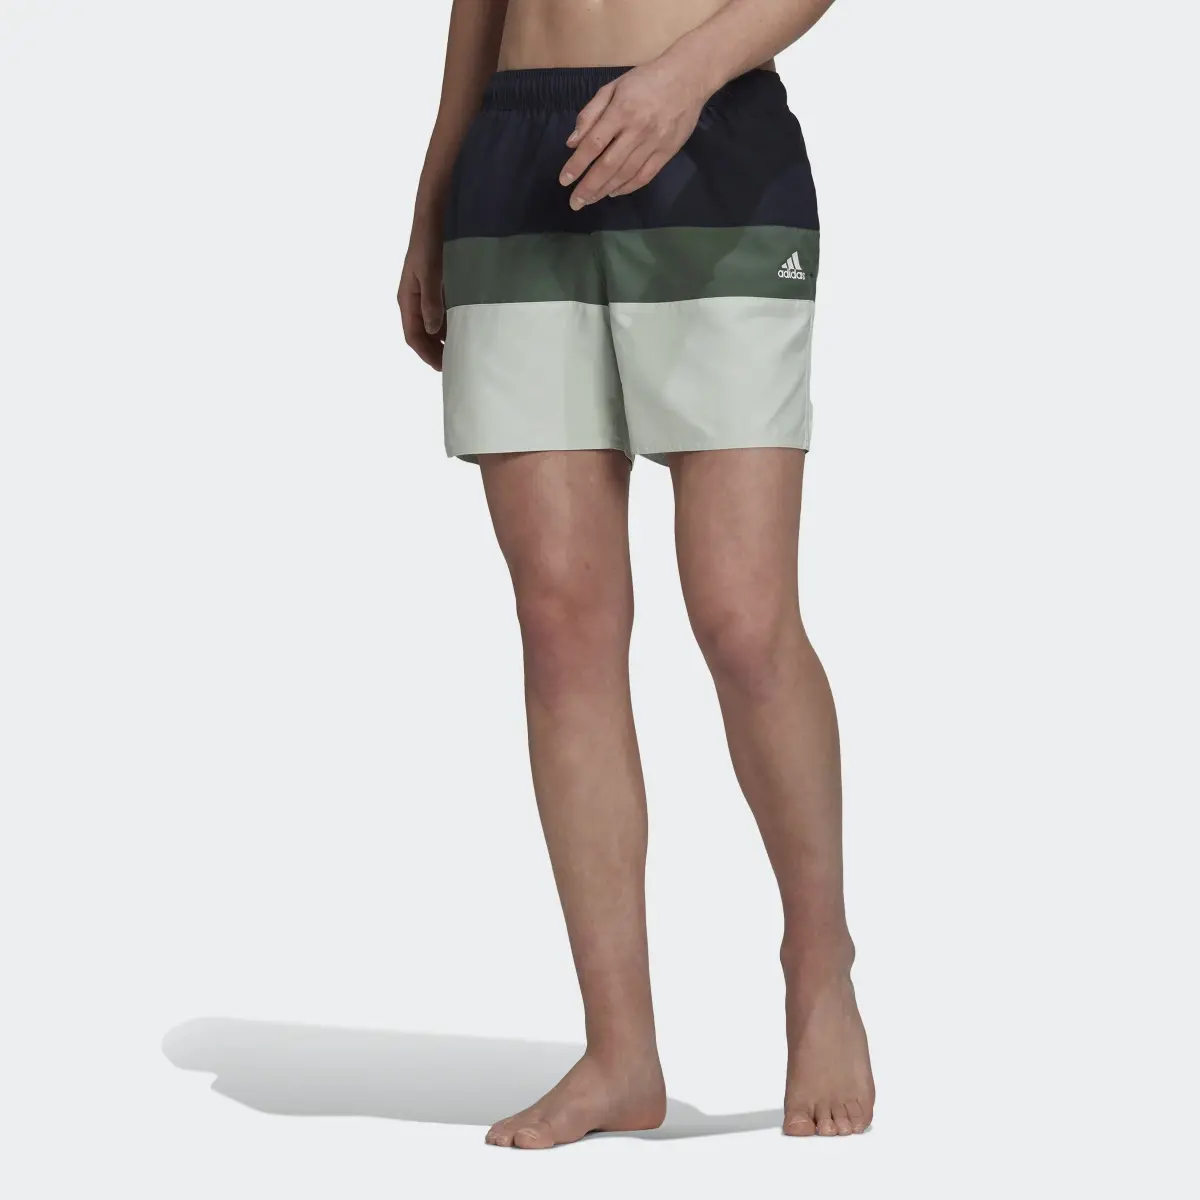 Adidas Short-Length Colorblock Swim Shorts. 1